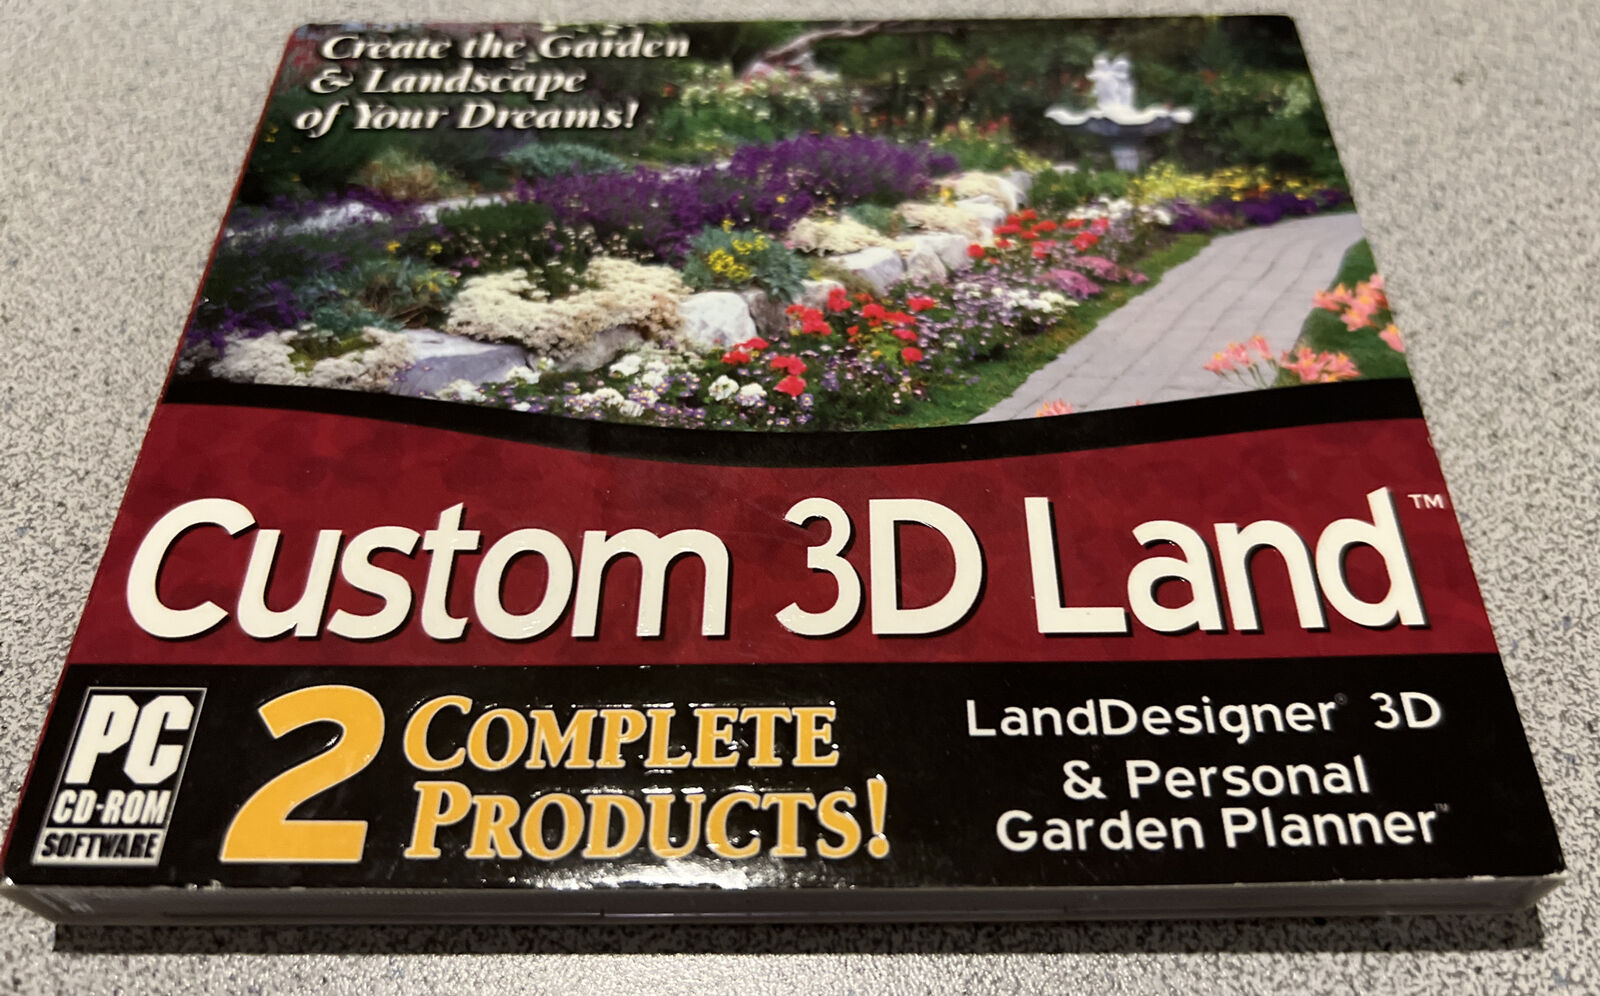 Custom 3D Land PC CD LandDesigner 3D/Personal Garden Planner  Landscape Design